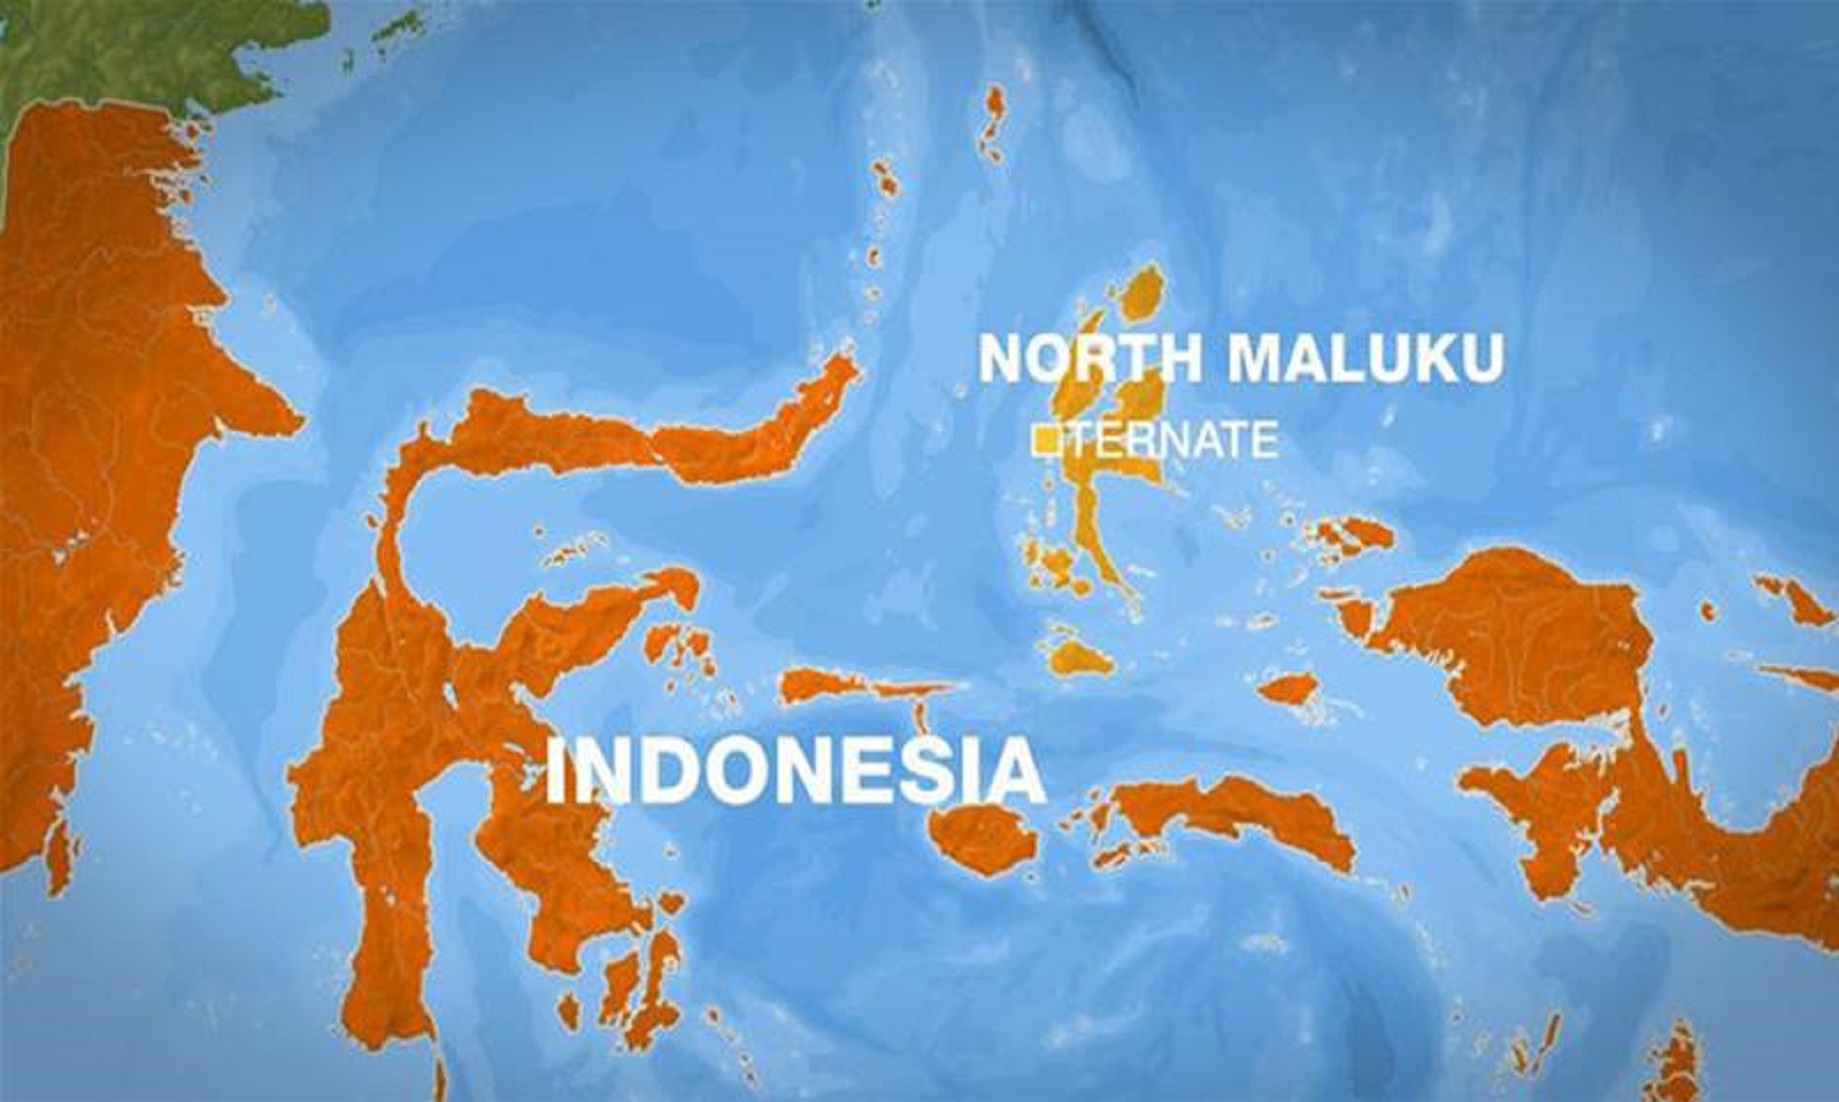 Update: 7.1 MAGNITUDE QUAKE ROCKS MALUKU ISLANDS, NORTH SULAWESI